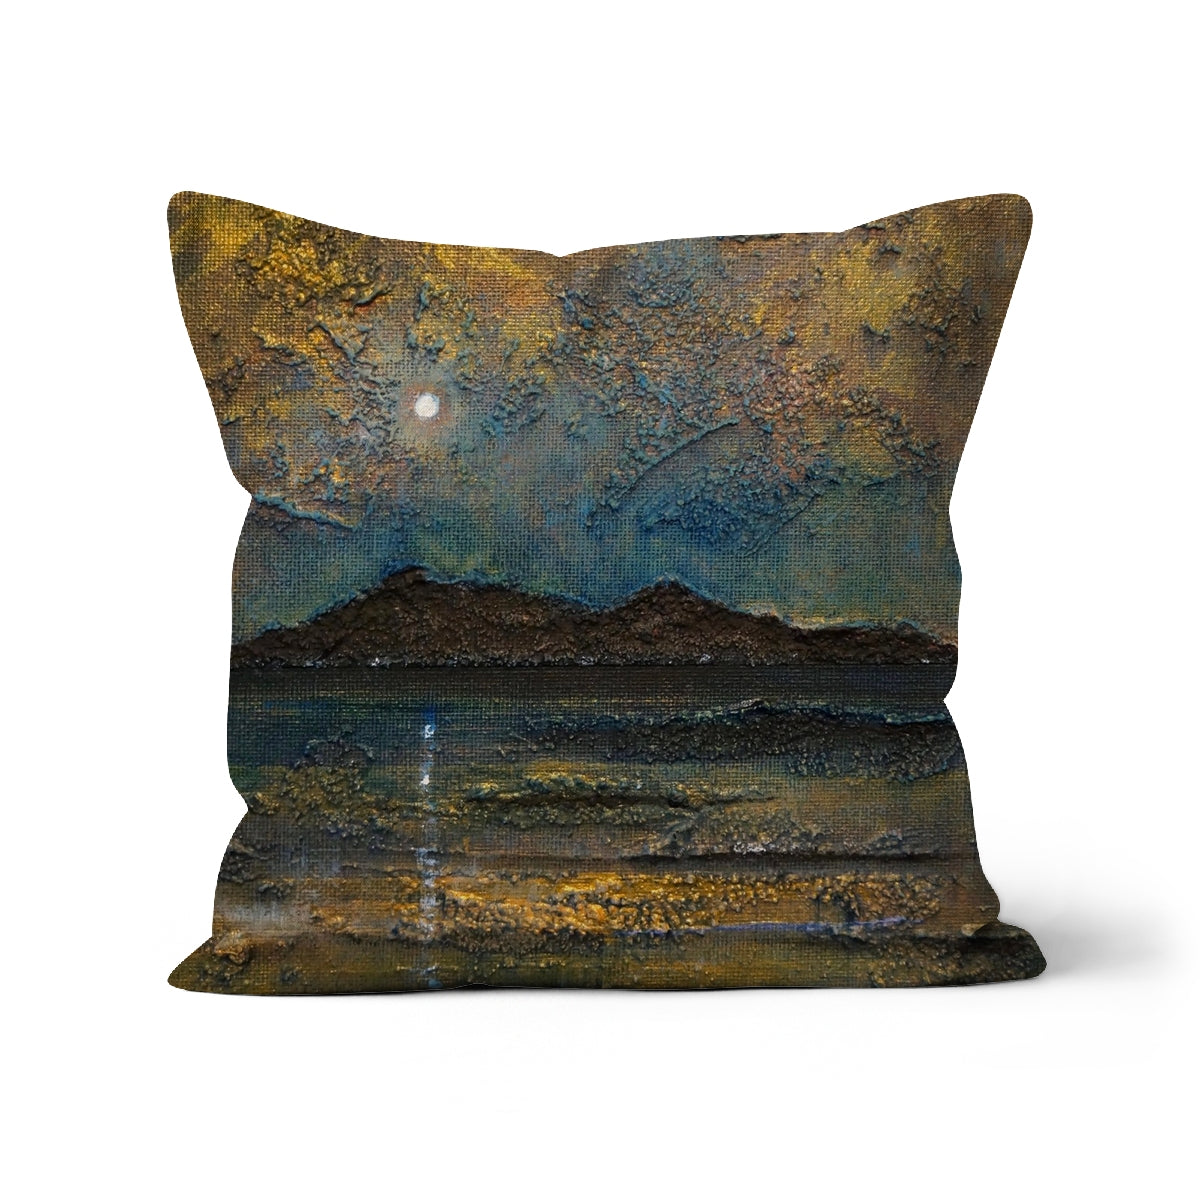 Arran Moonlight Art Gifts Cushion-Cushions-Arran Art Gallery-Canvas-16"x16"-Paintings, Prints, Homeware, Art Gifts From Scotland By Scottish Artist Kevin Hunter